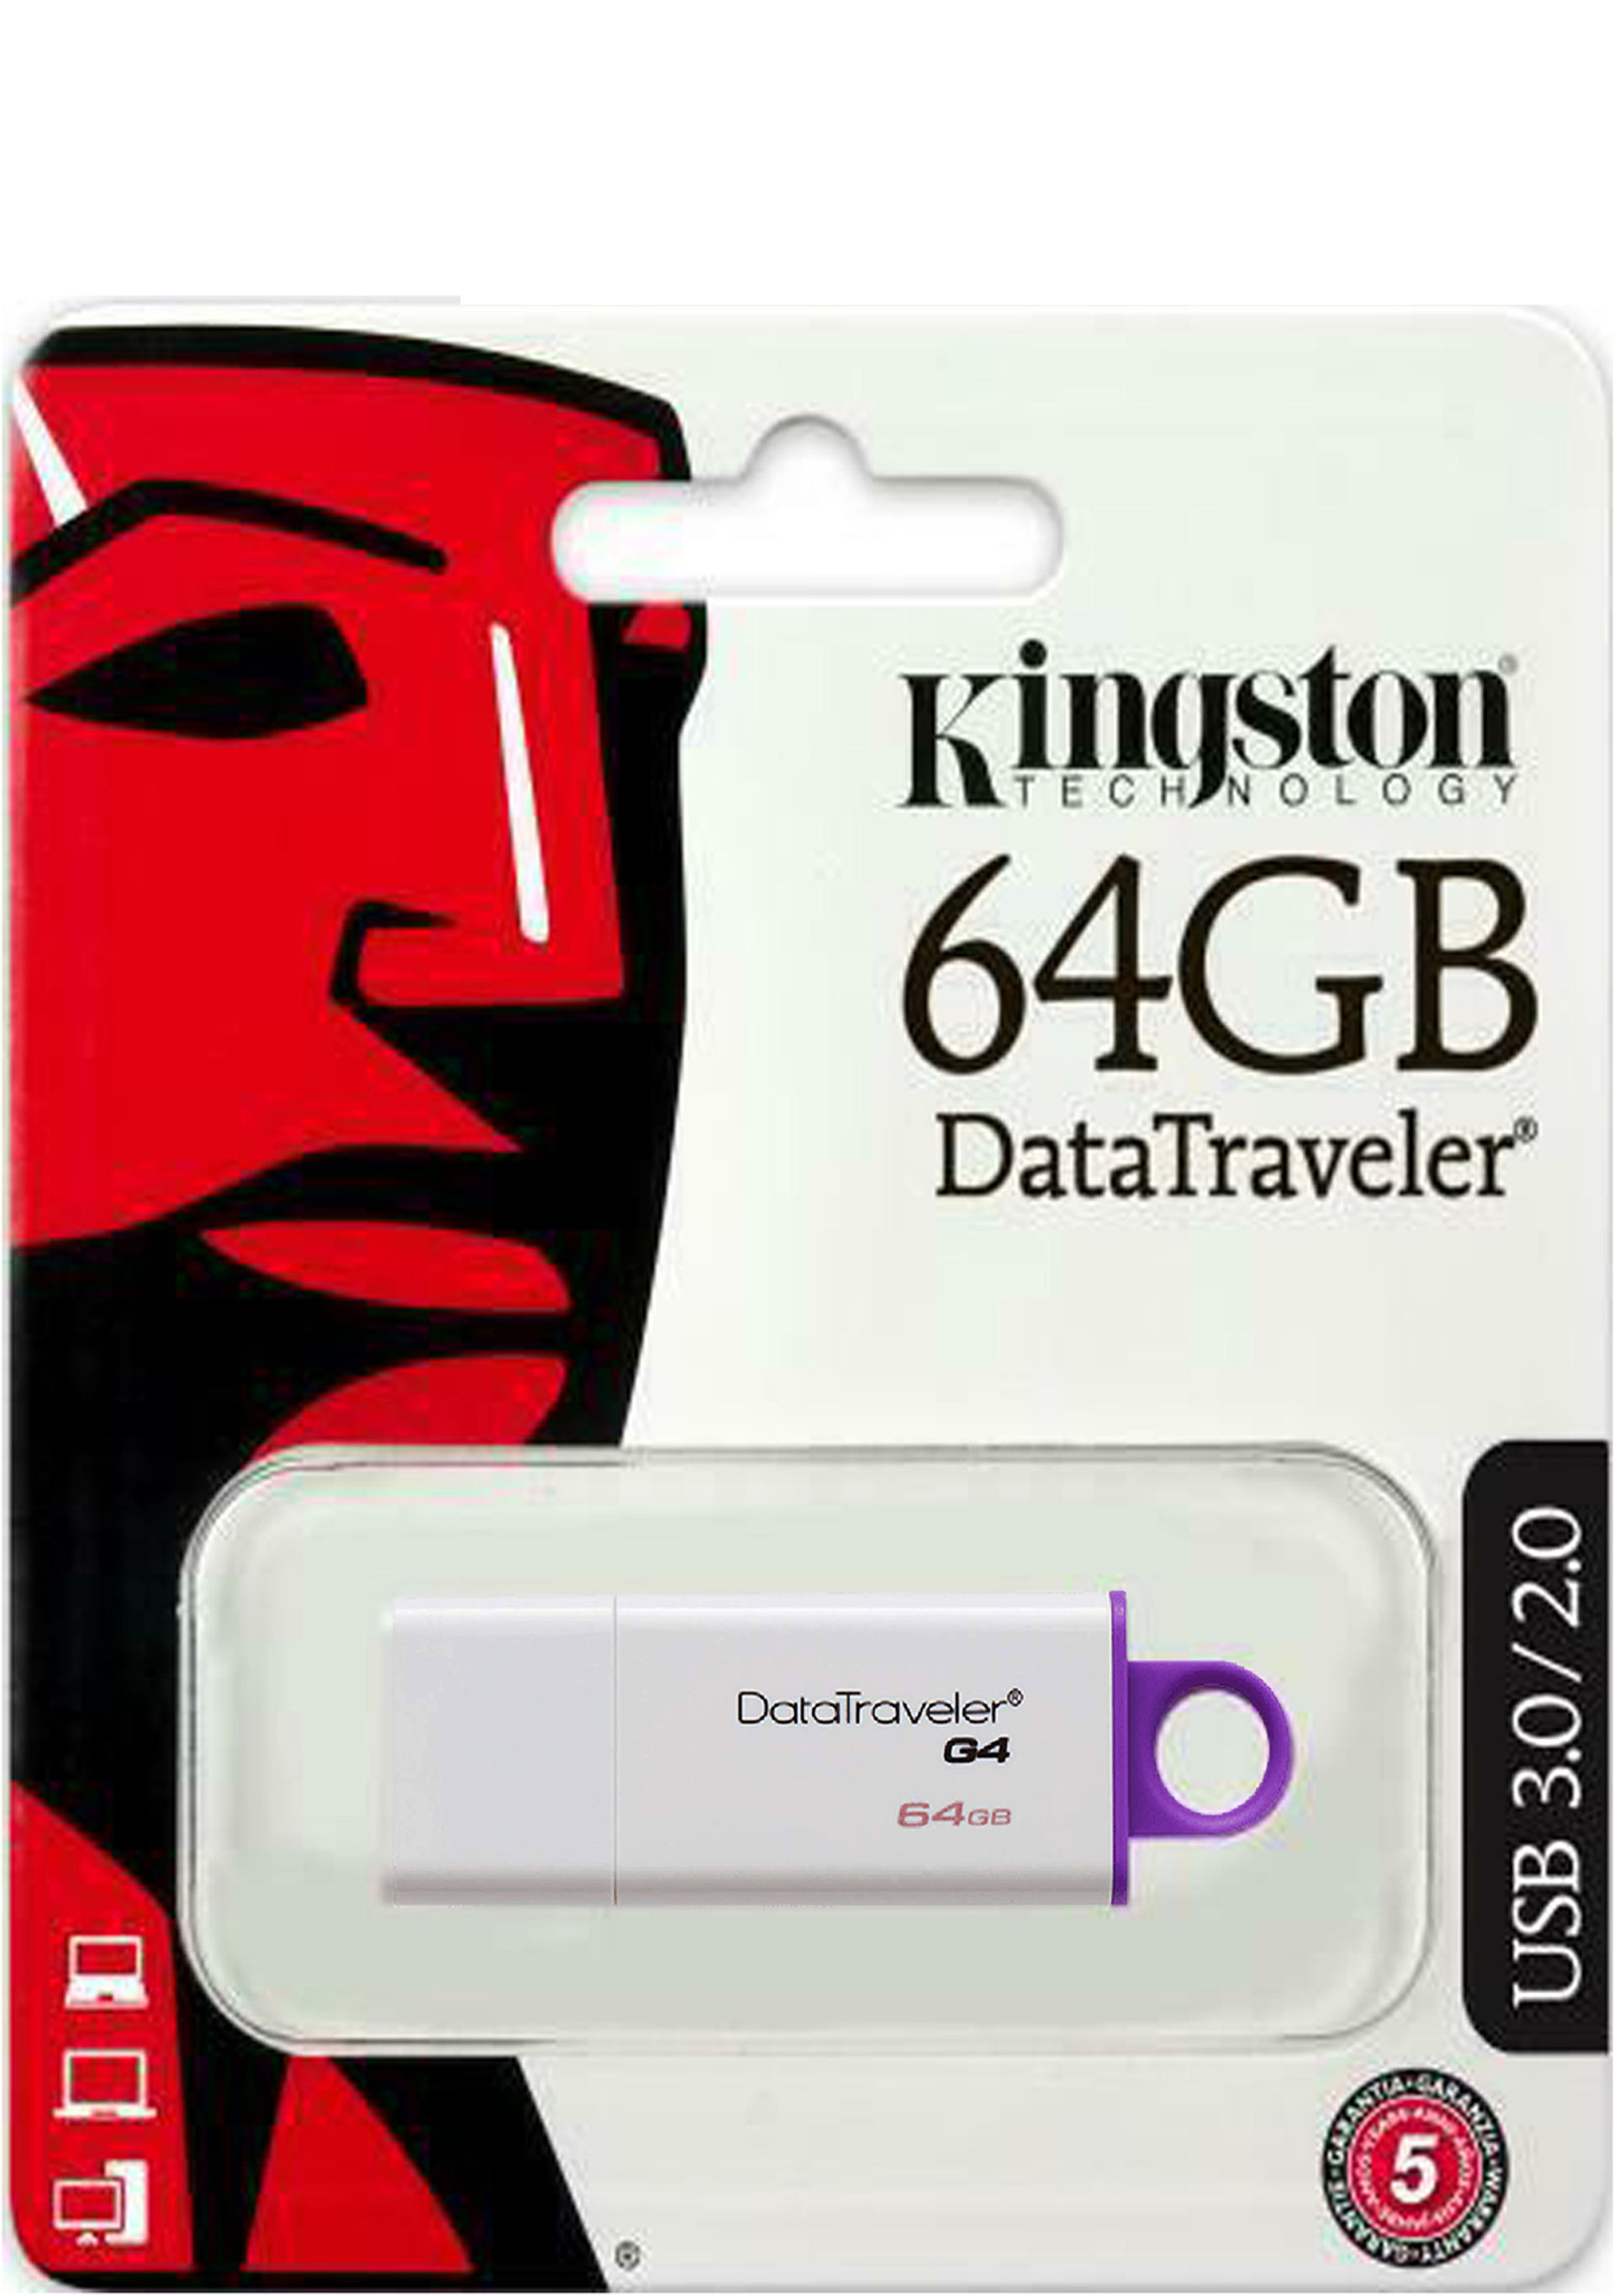 KINGSTON PENDRIVE G4 64GBKingston